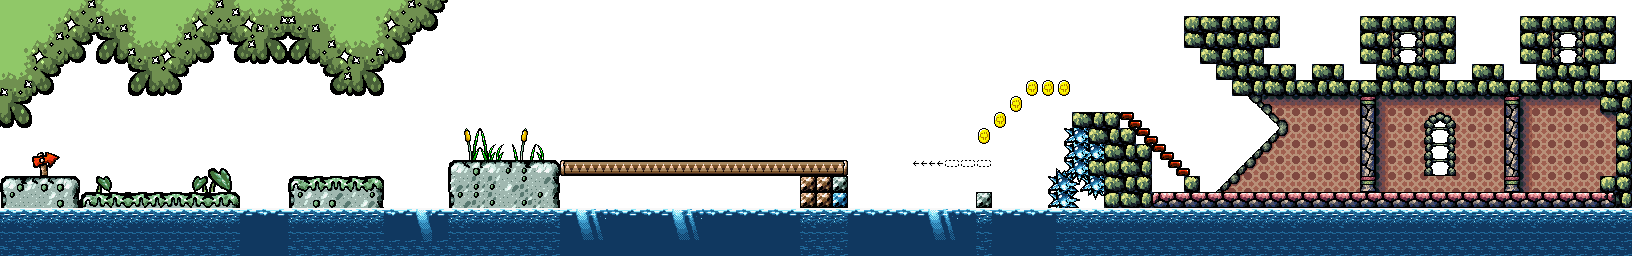 Super Mario World 2: Yoshi's Island - 3-4: Prince Froggy's Fort (1/6)